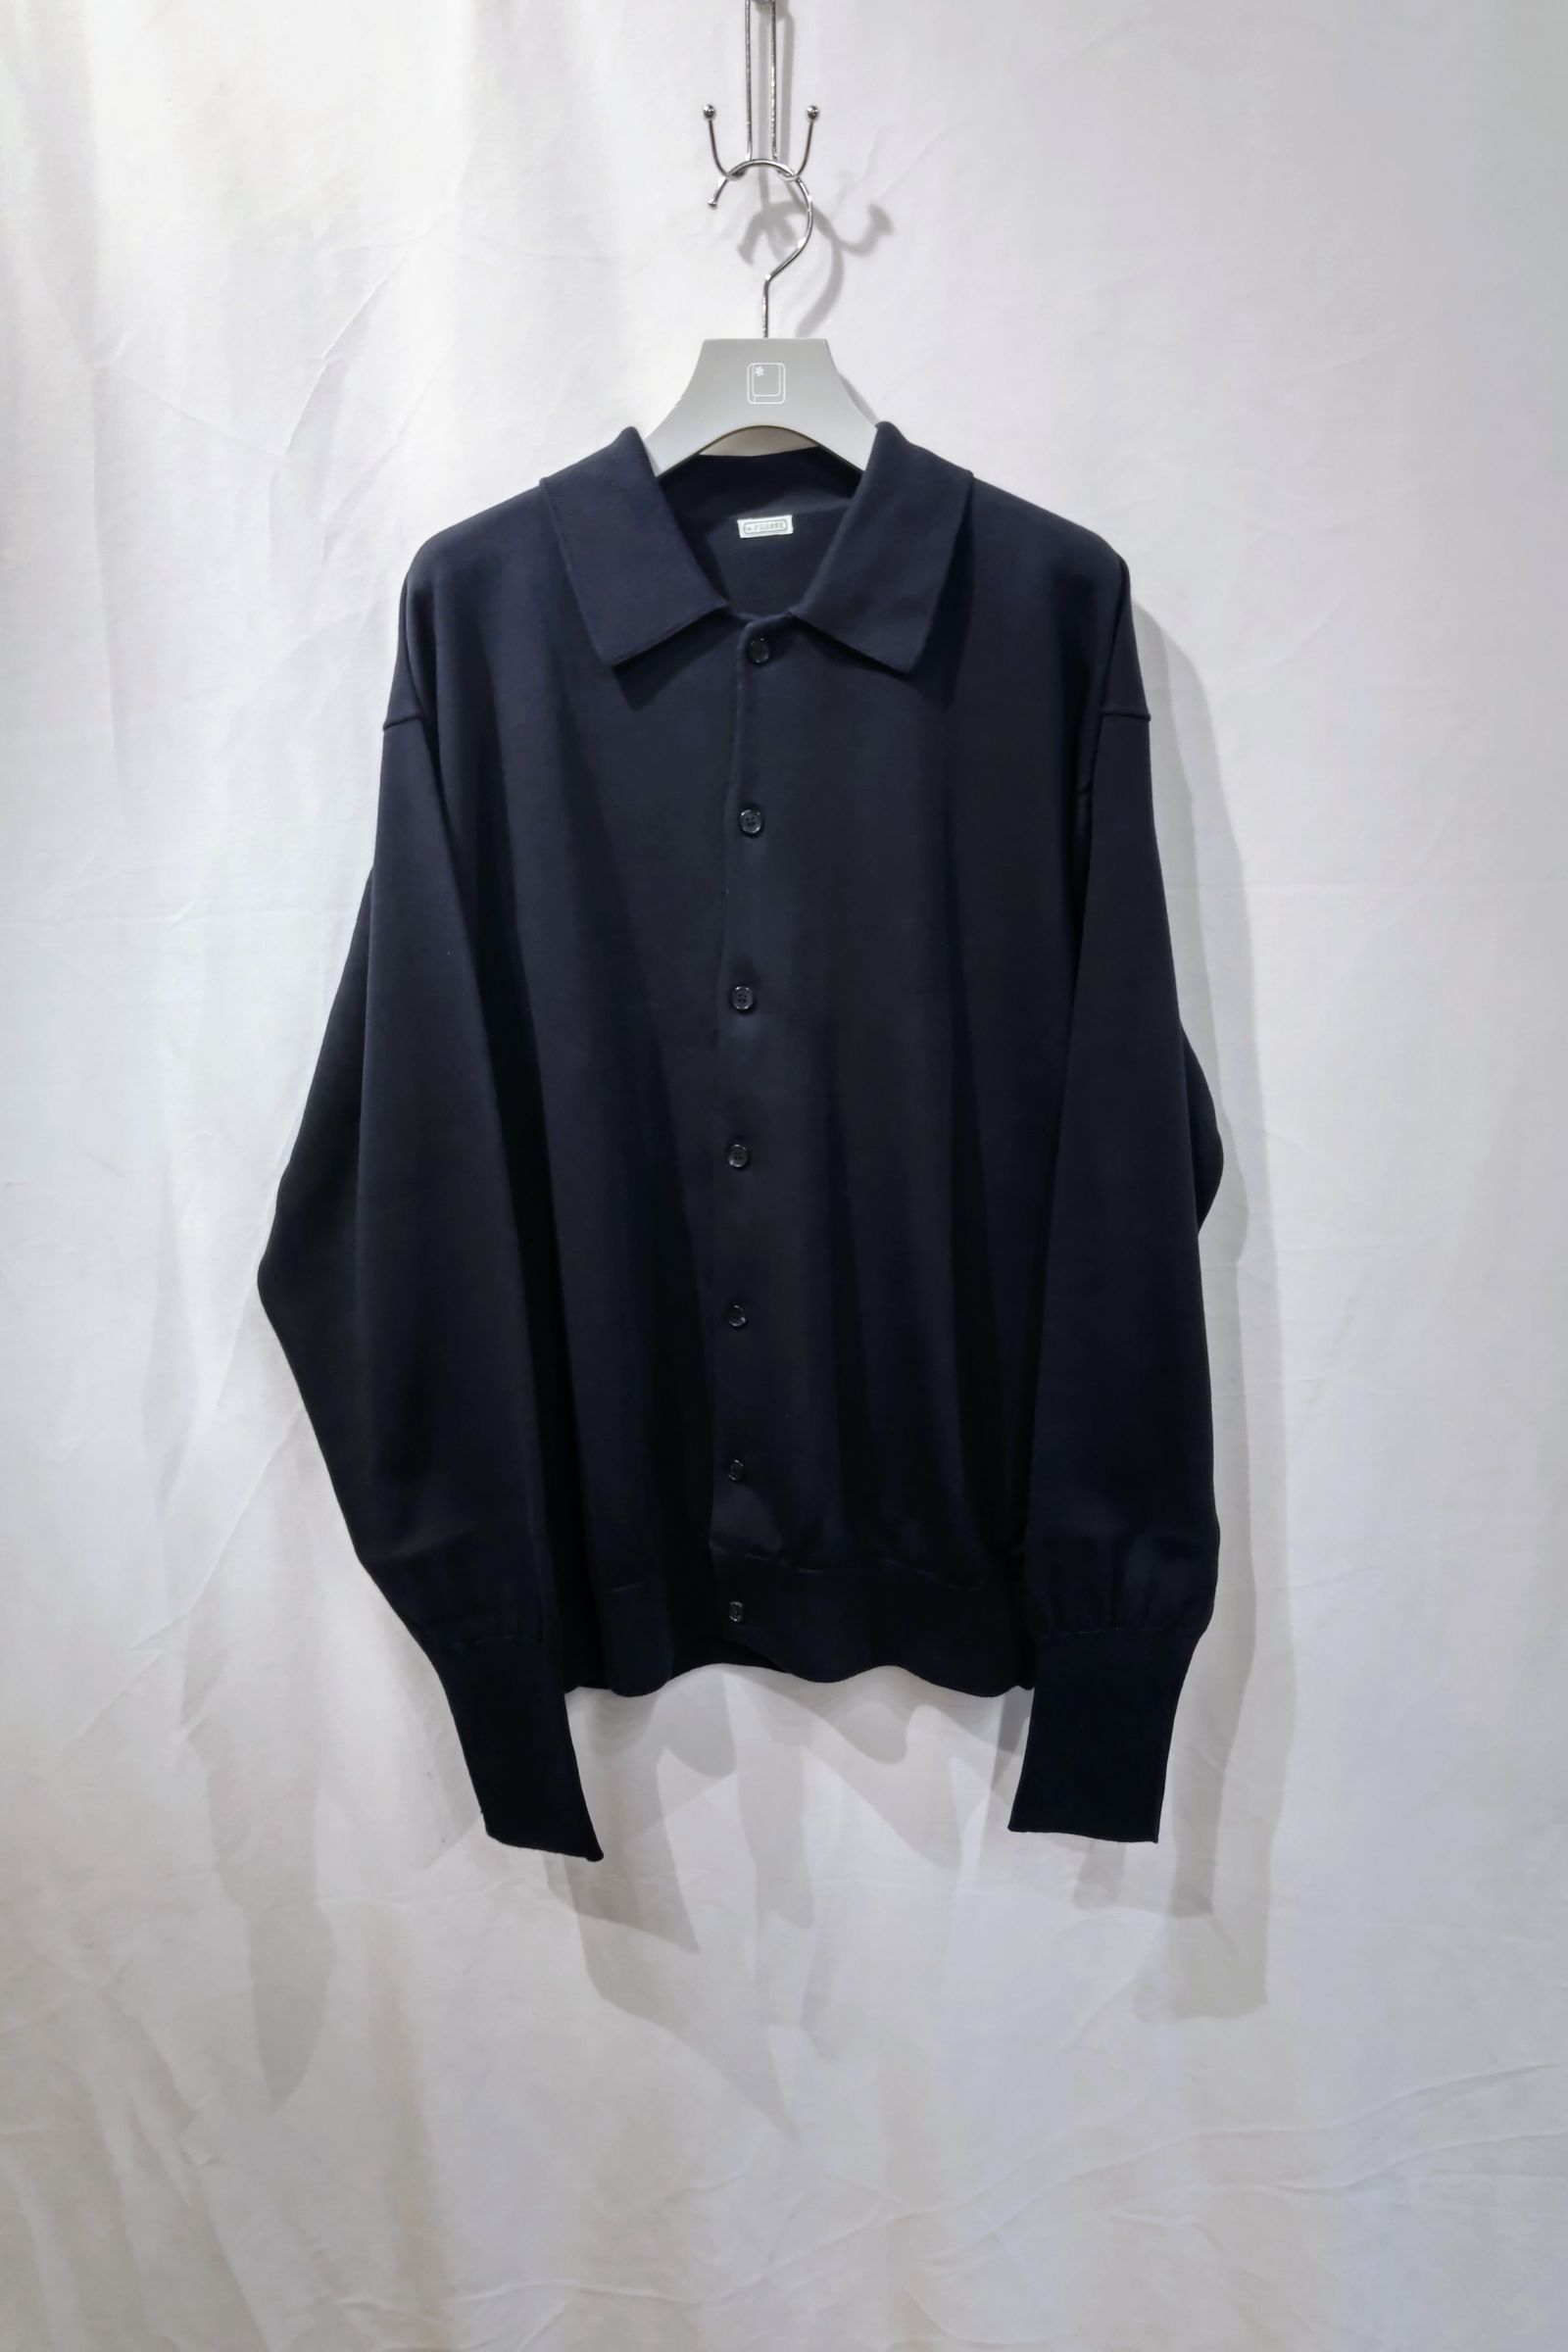 A.PRESSE - cotton knit polo collar cardigan -navy- 23ss | asterisk